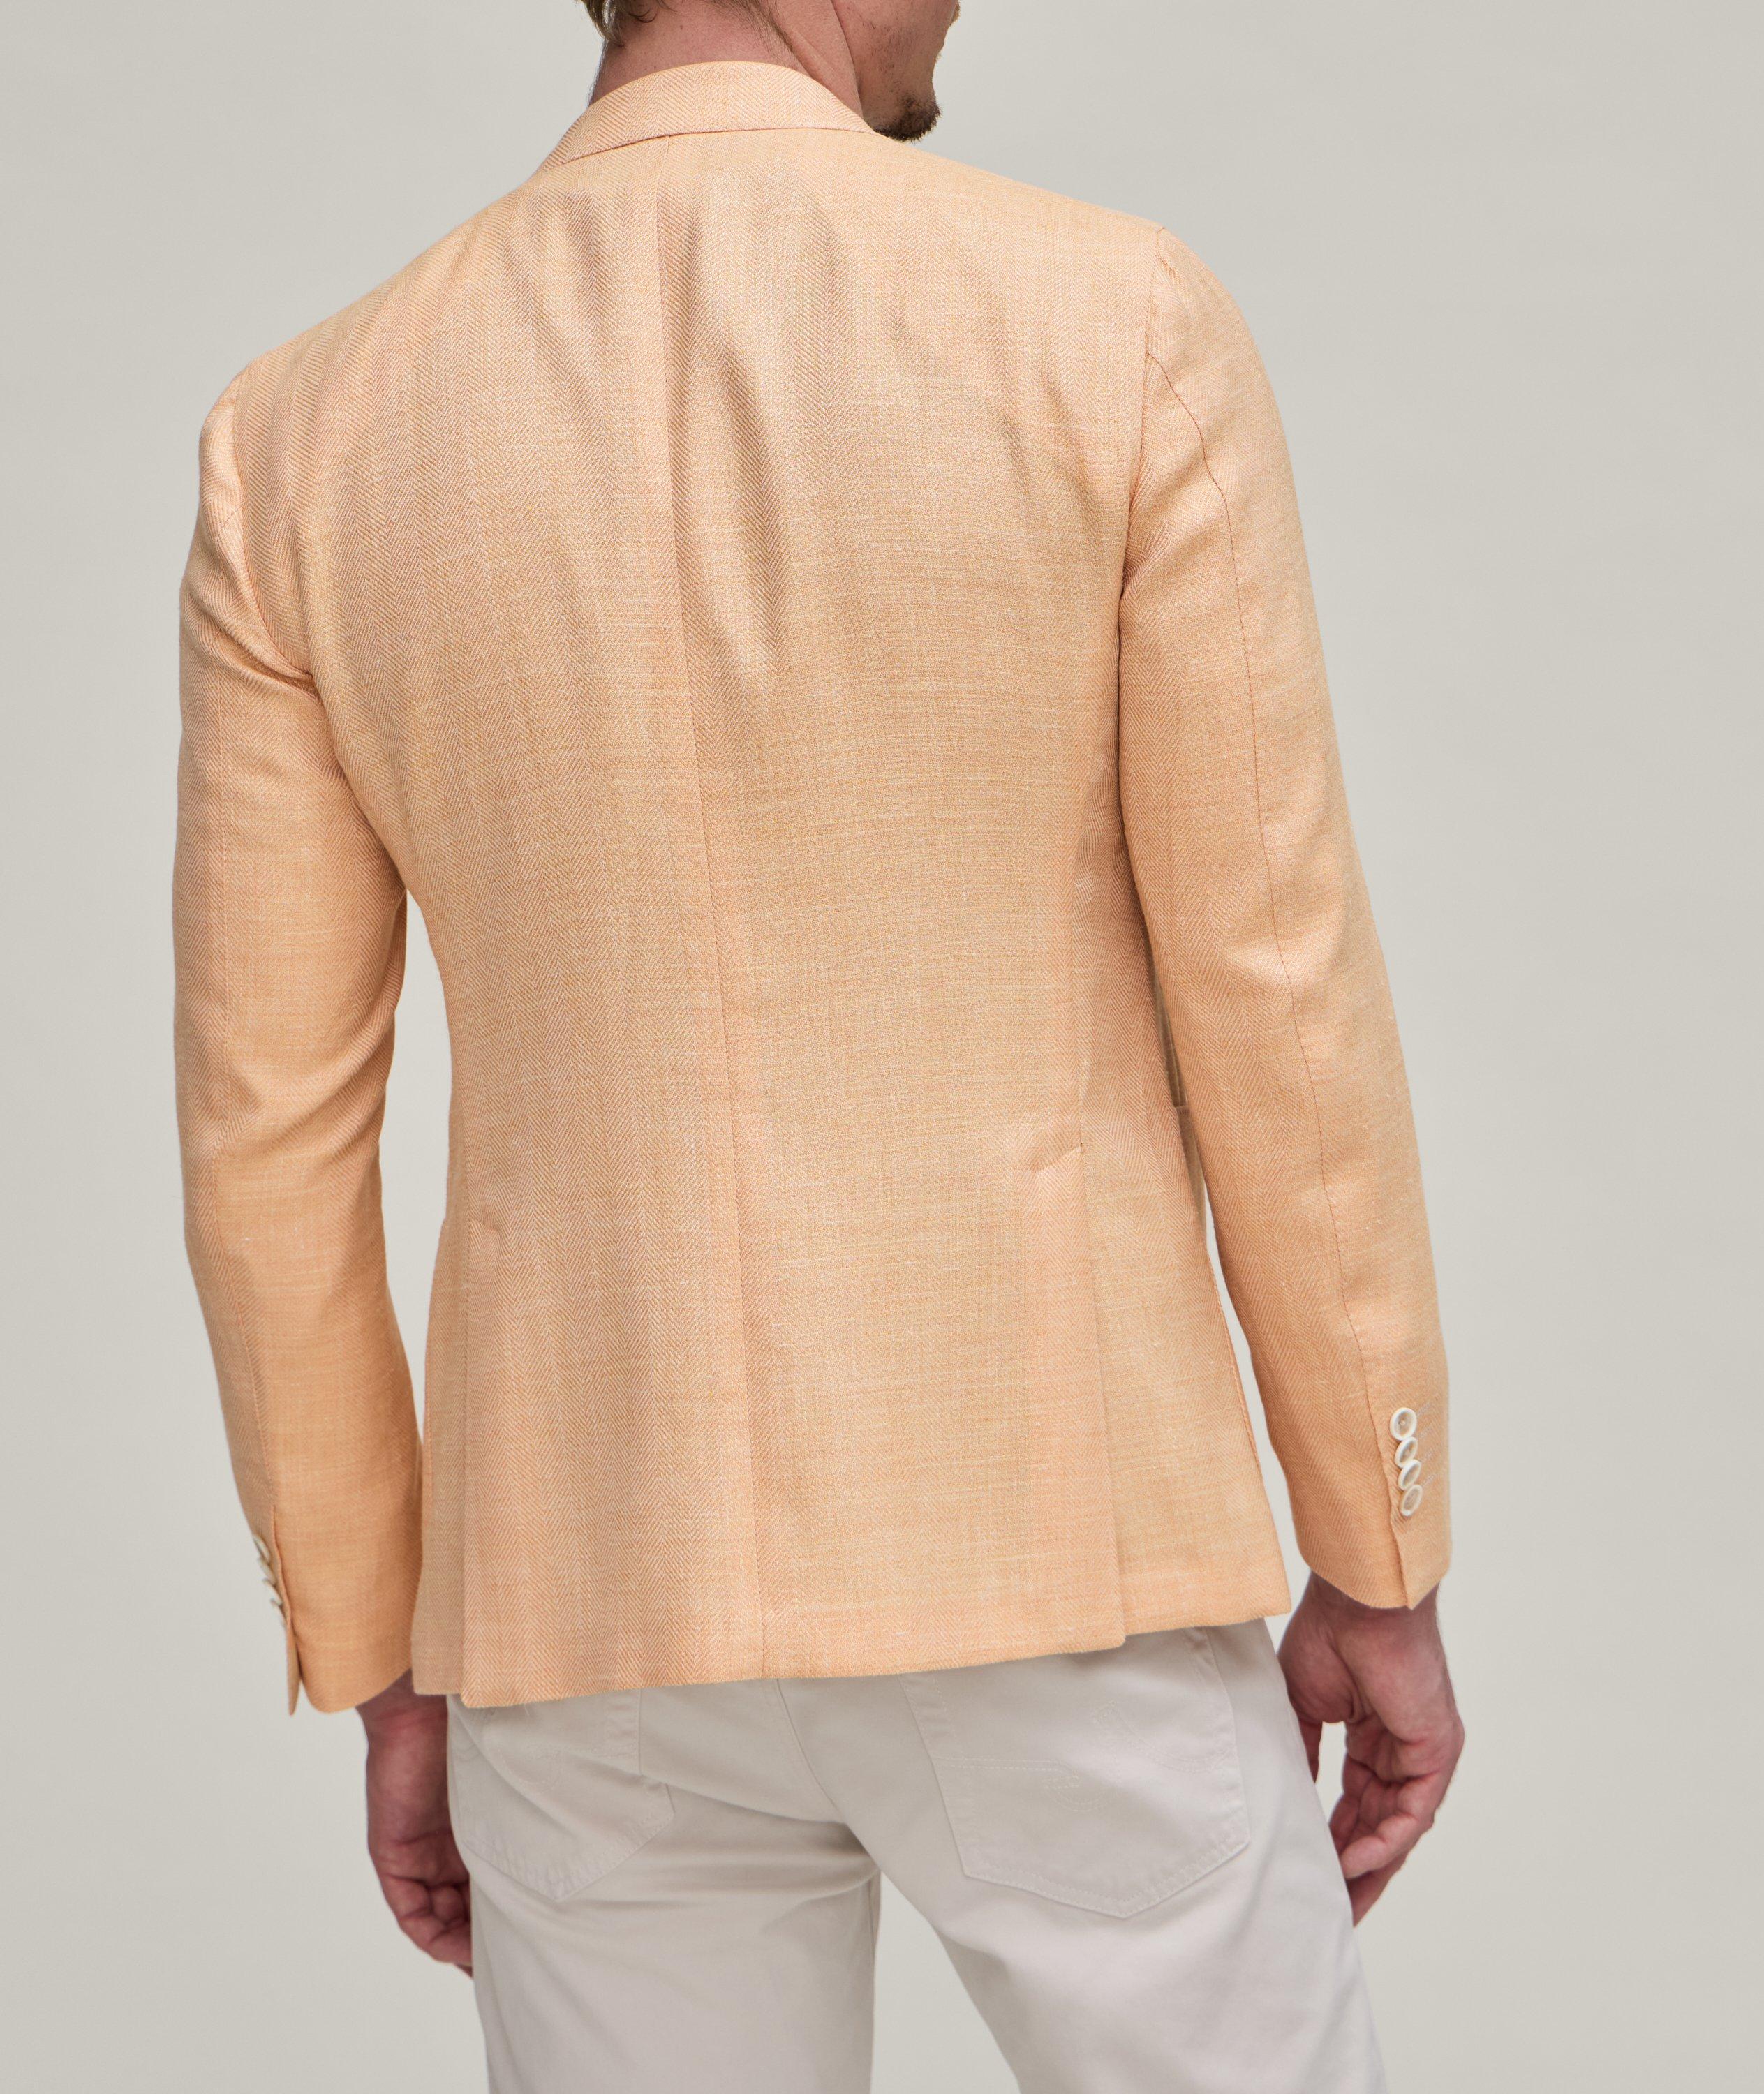 Tonal Herringbone Wool, Silk & Linen Sport Jacket image 2